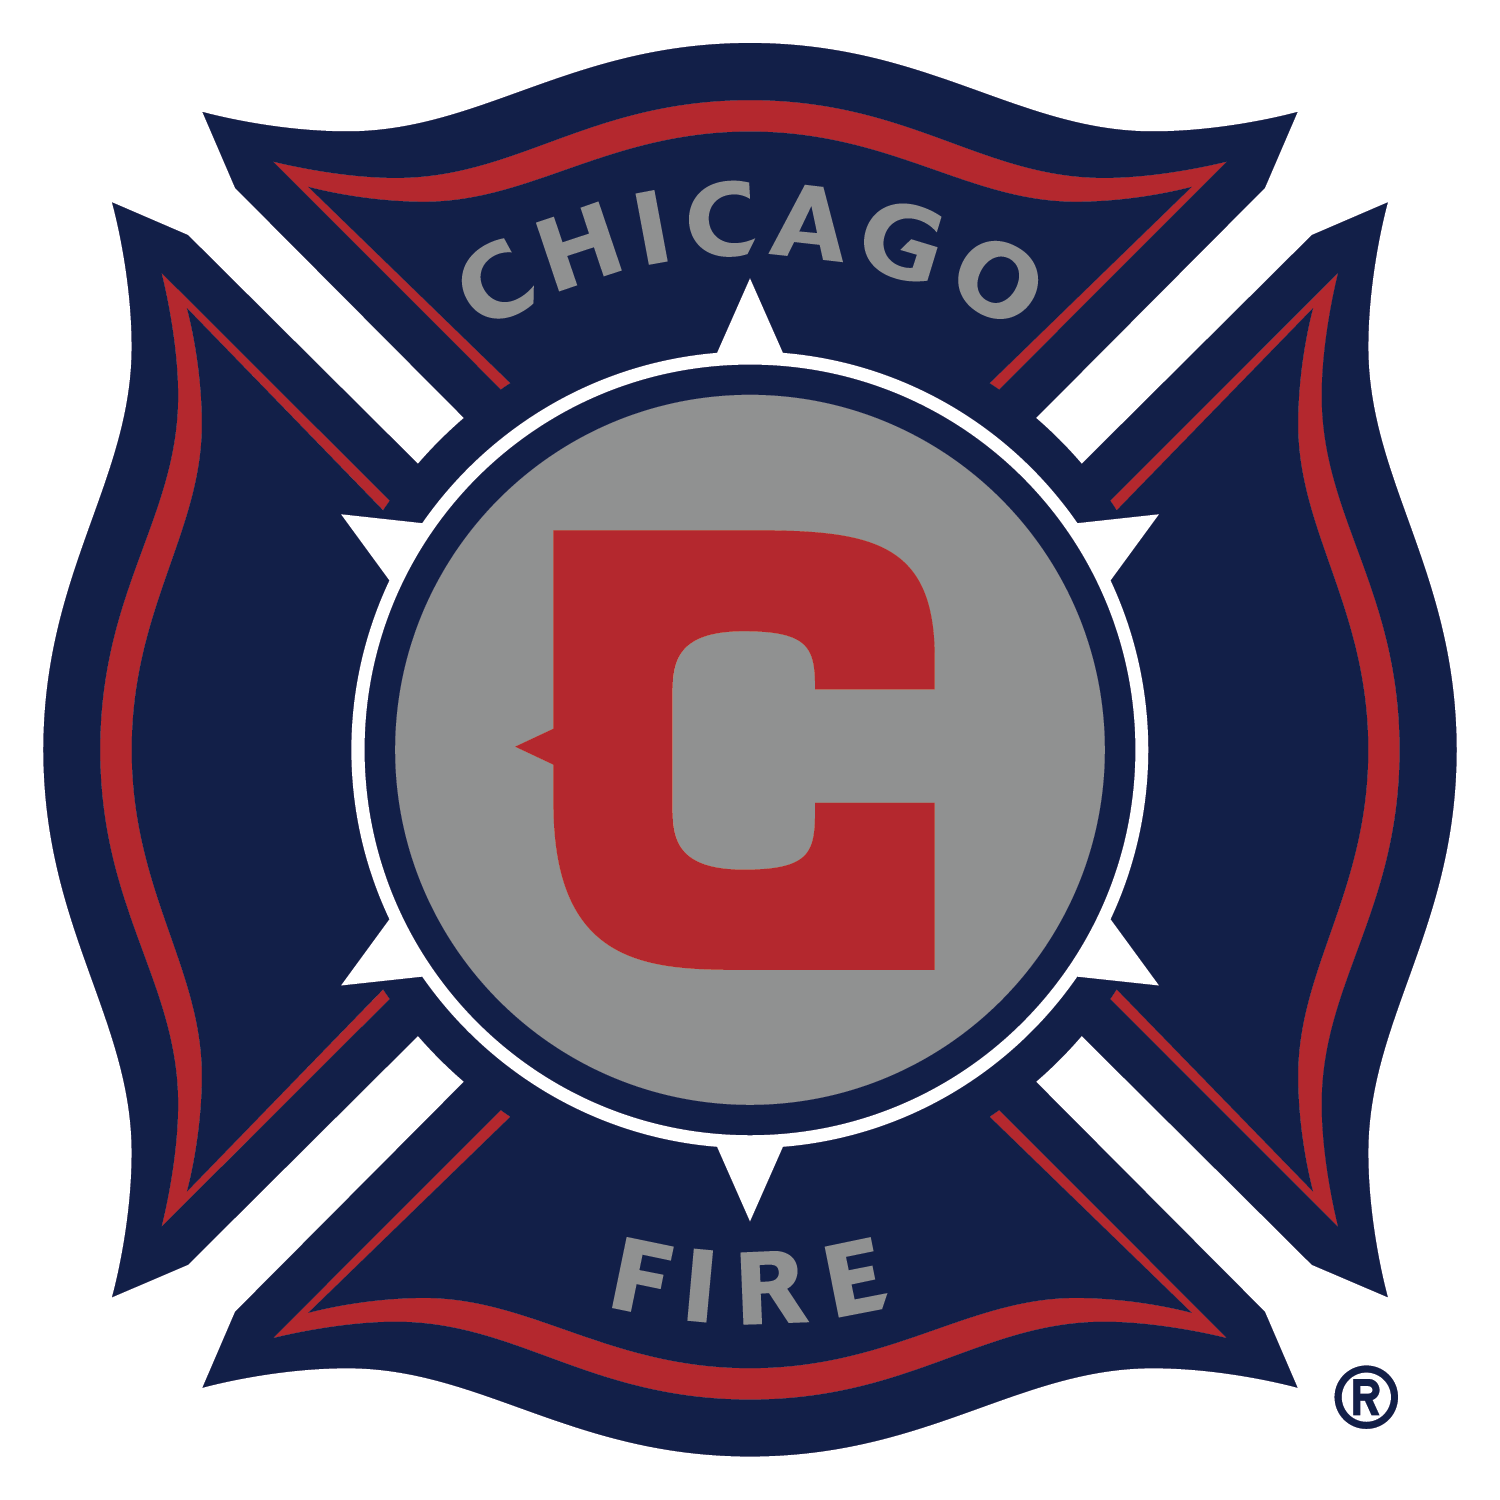 Fire Logo - Chicago Fire Soccer Logo (1500x1500)